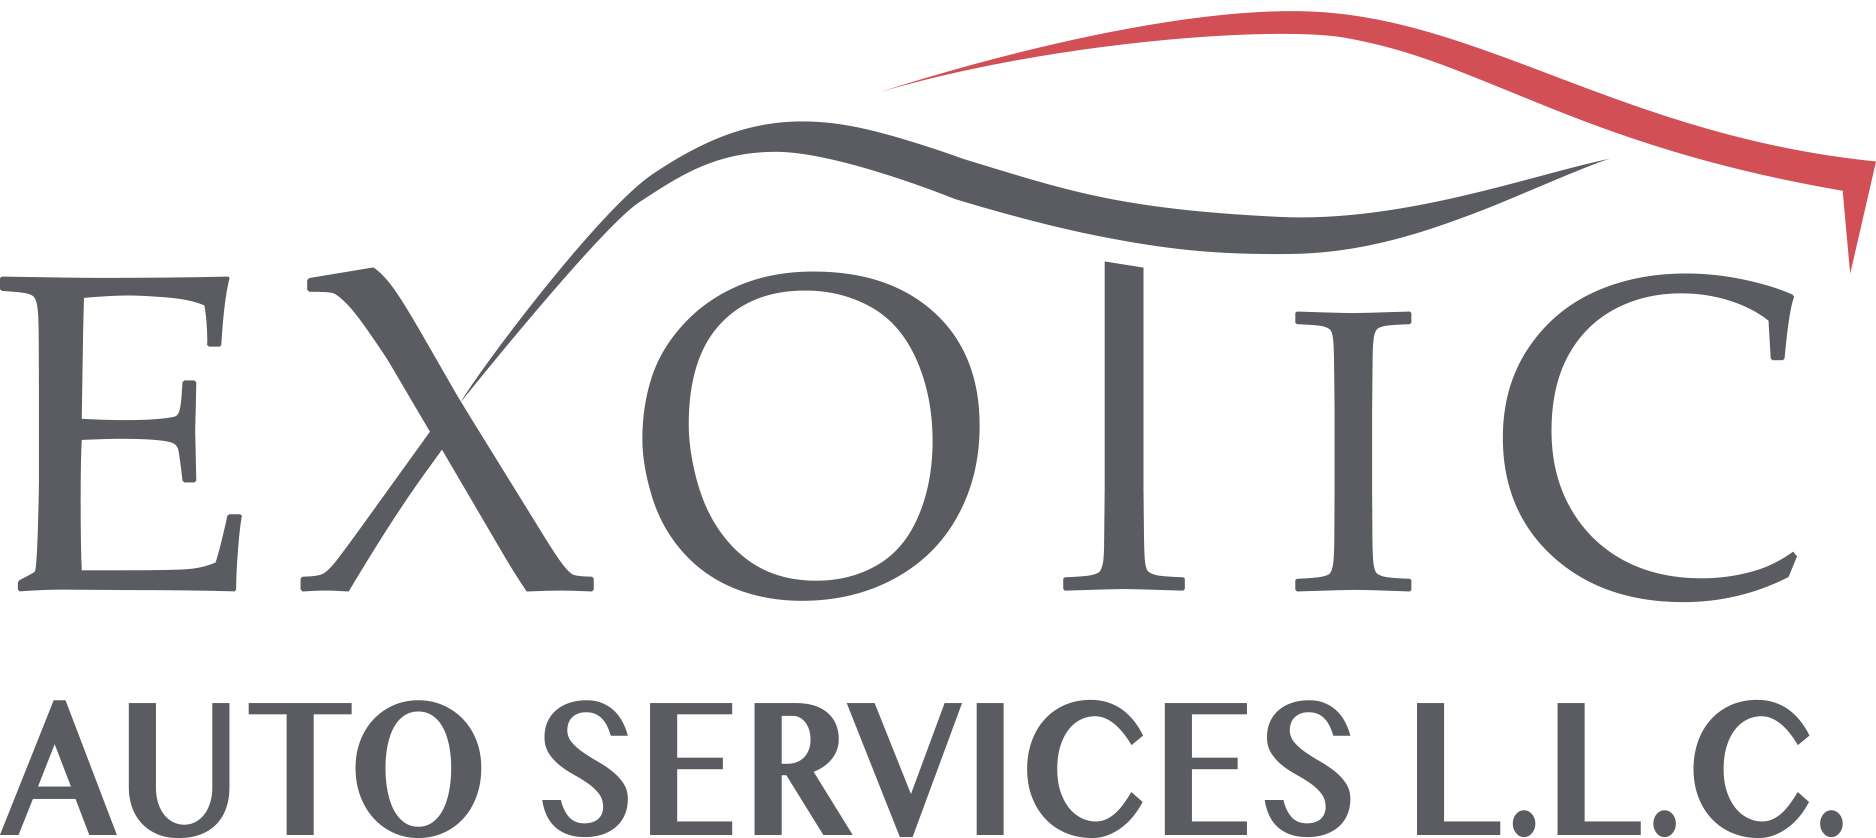 Exotic Auto Services LLC Logo